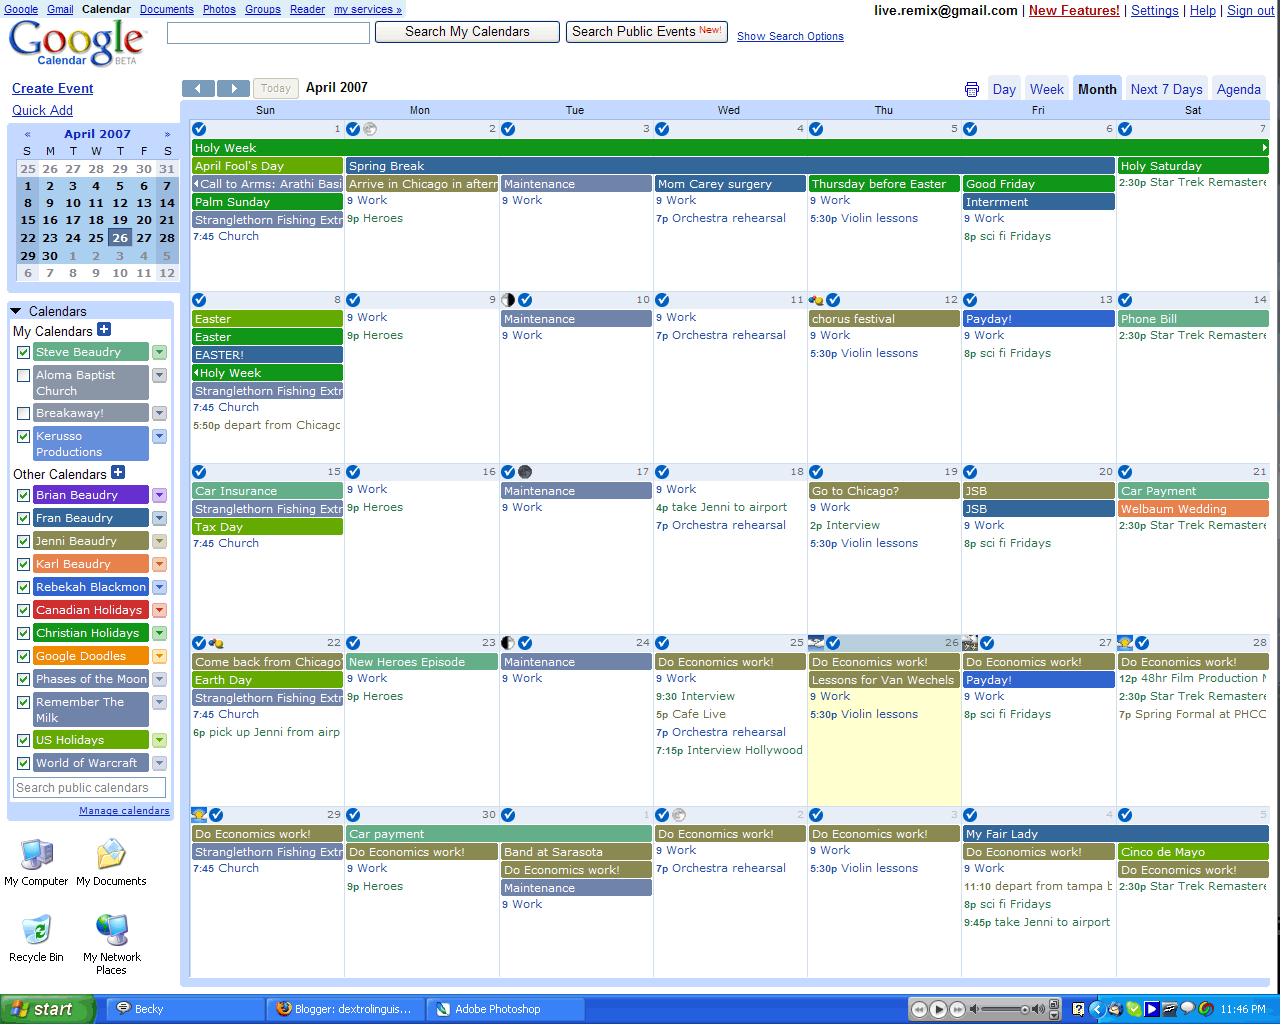 google-docs-editorial-calendar-template-calendar-for-planning